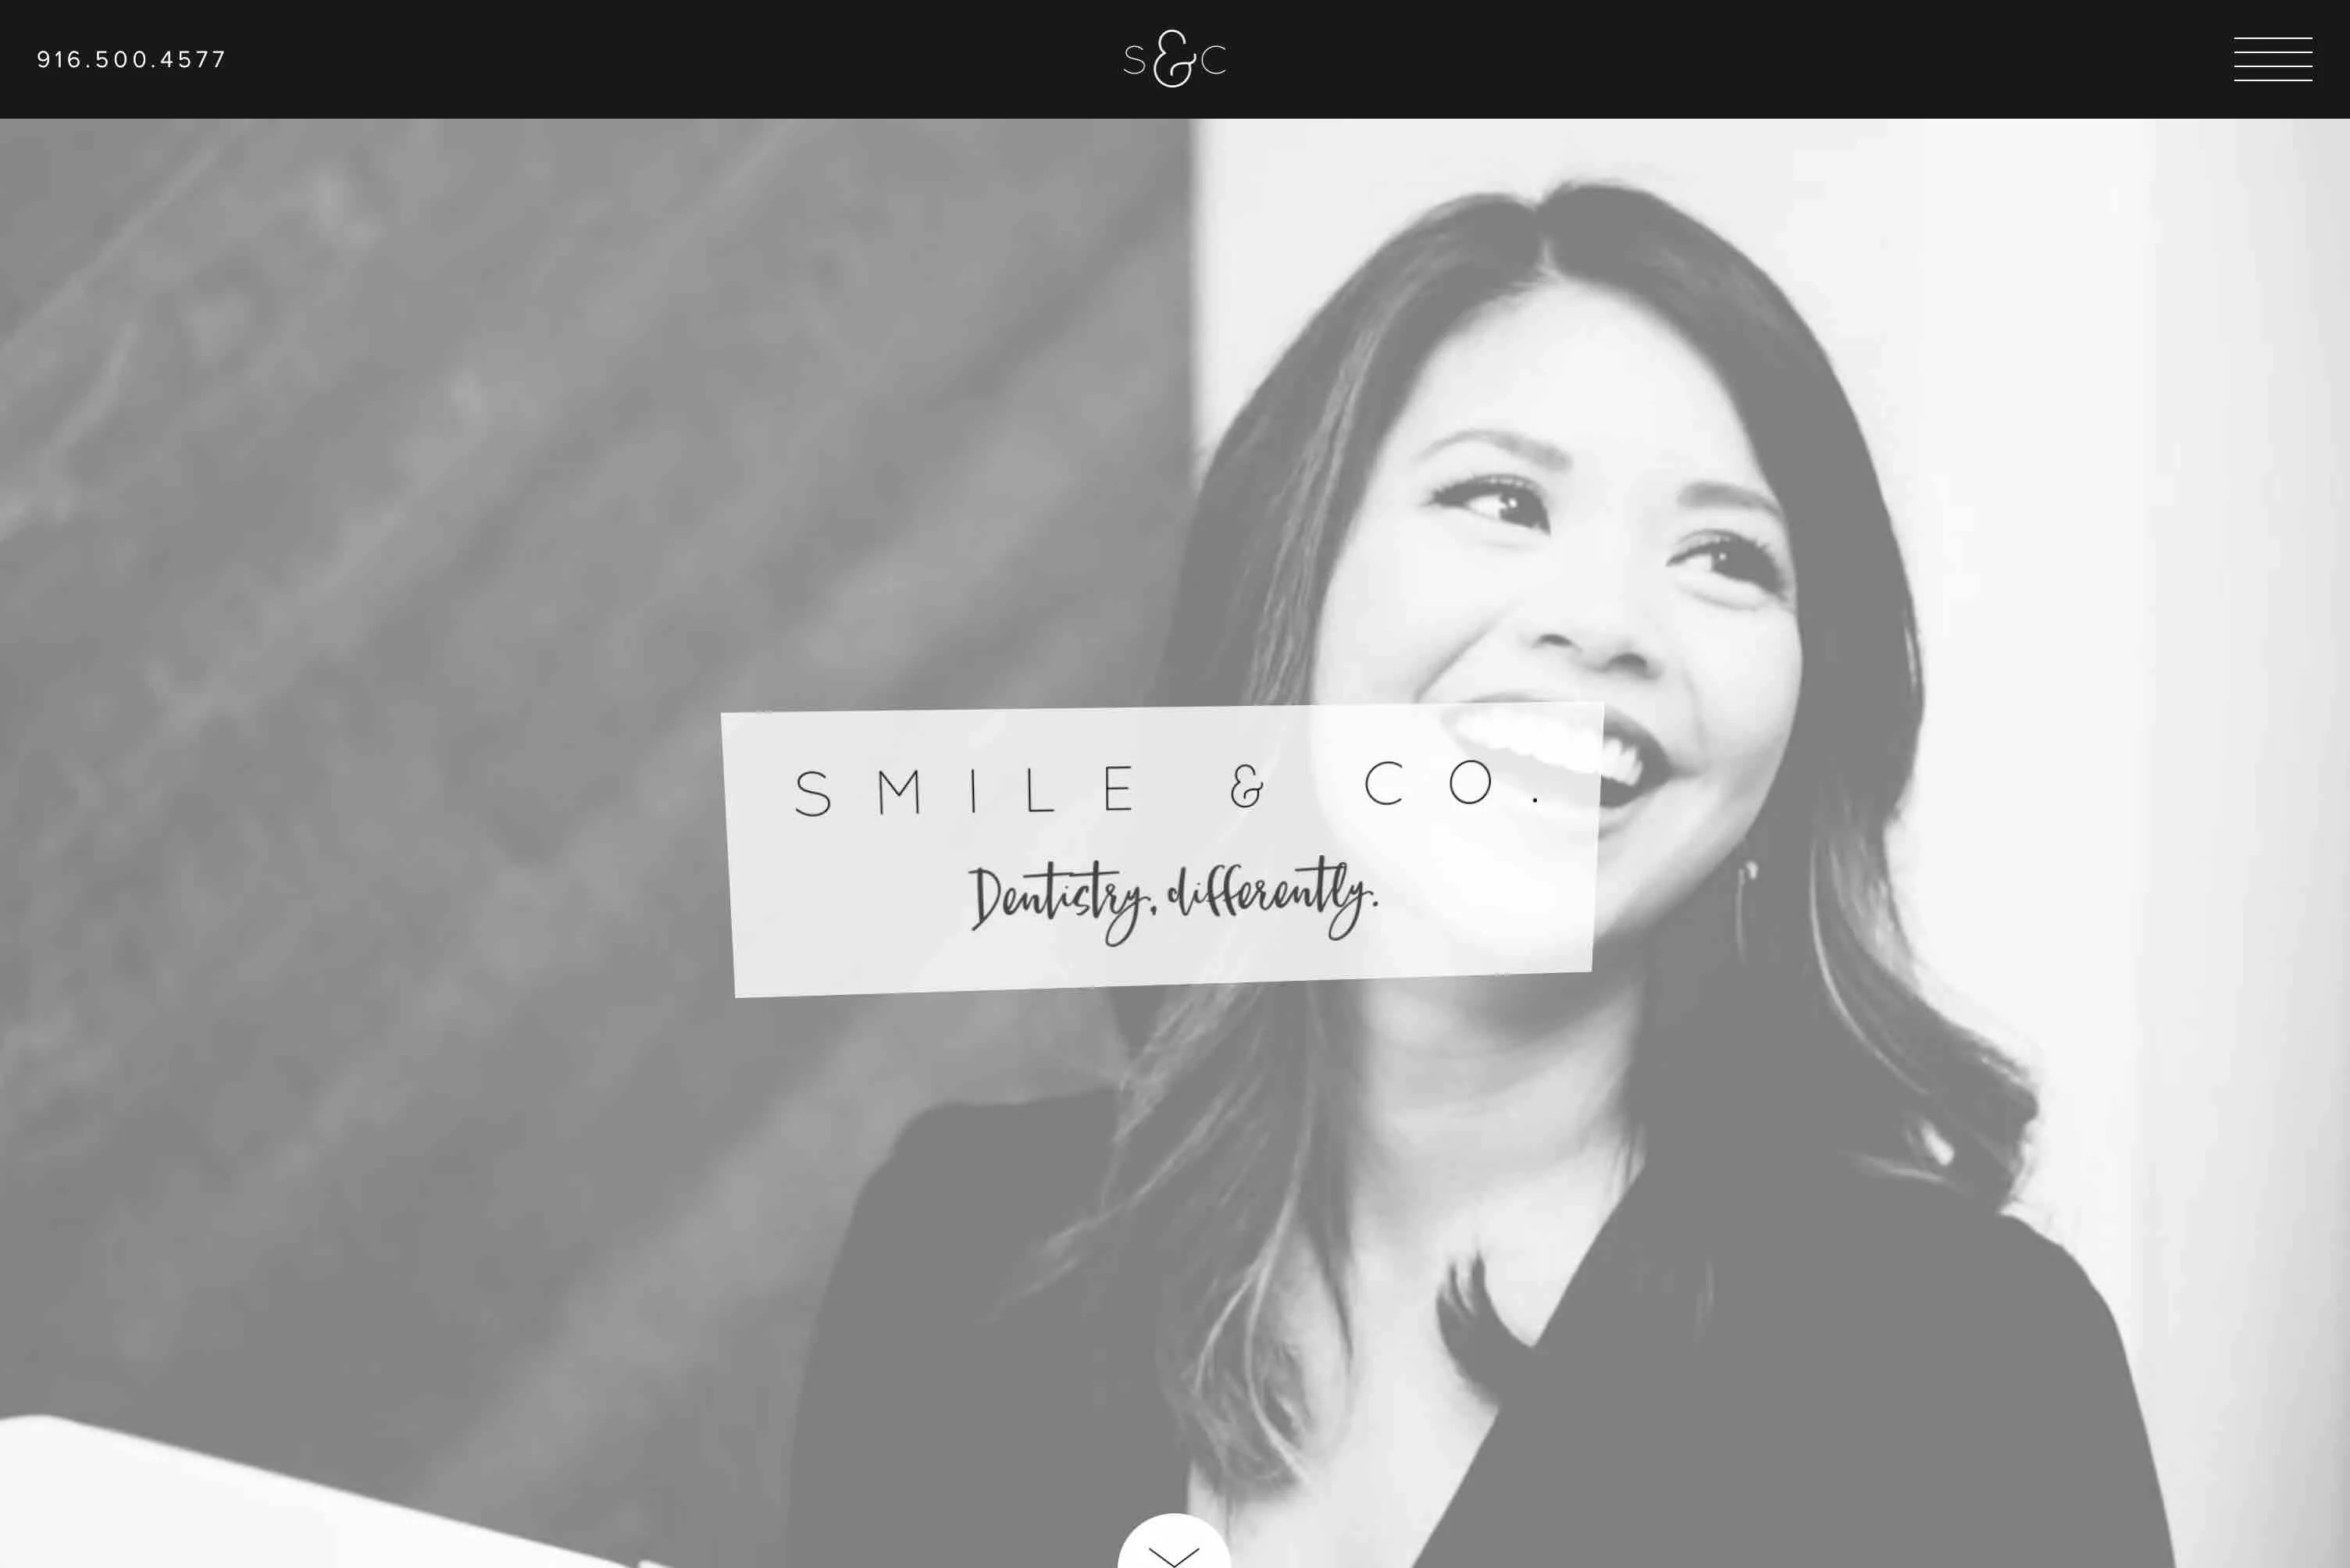 A screenshot of the Smile & Company website